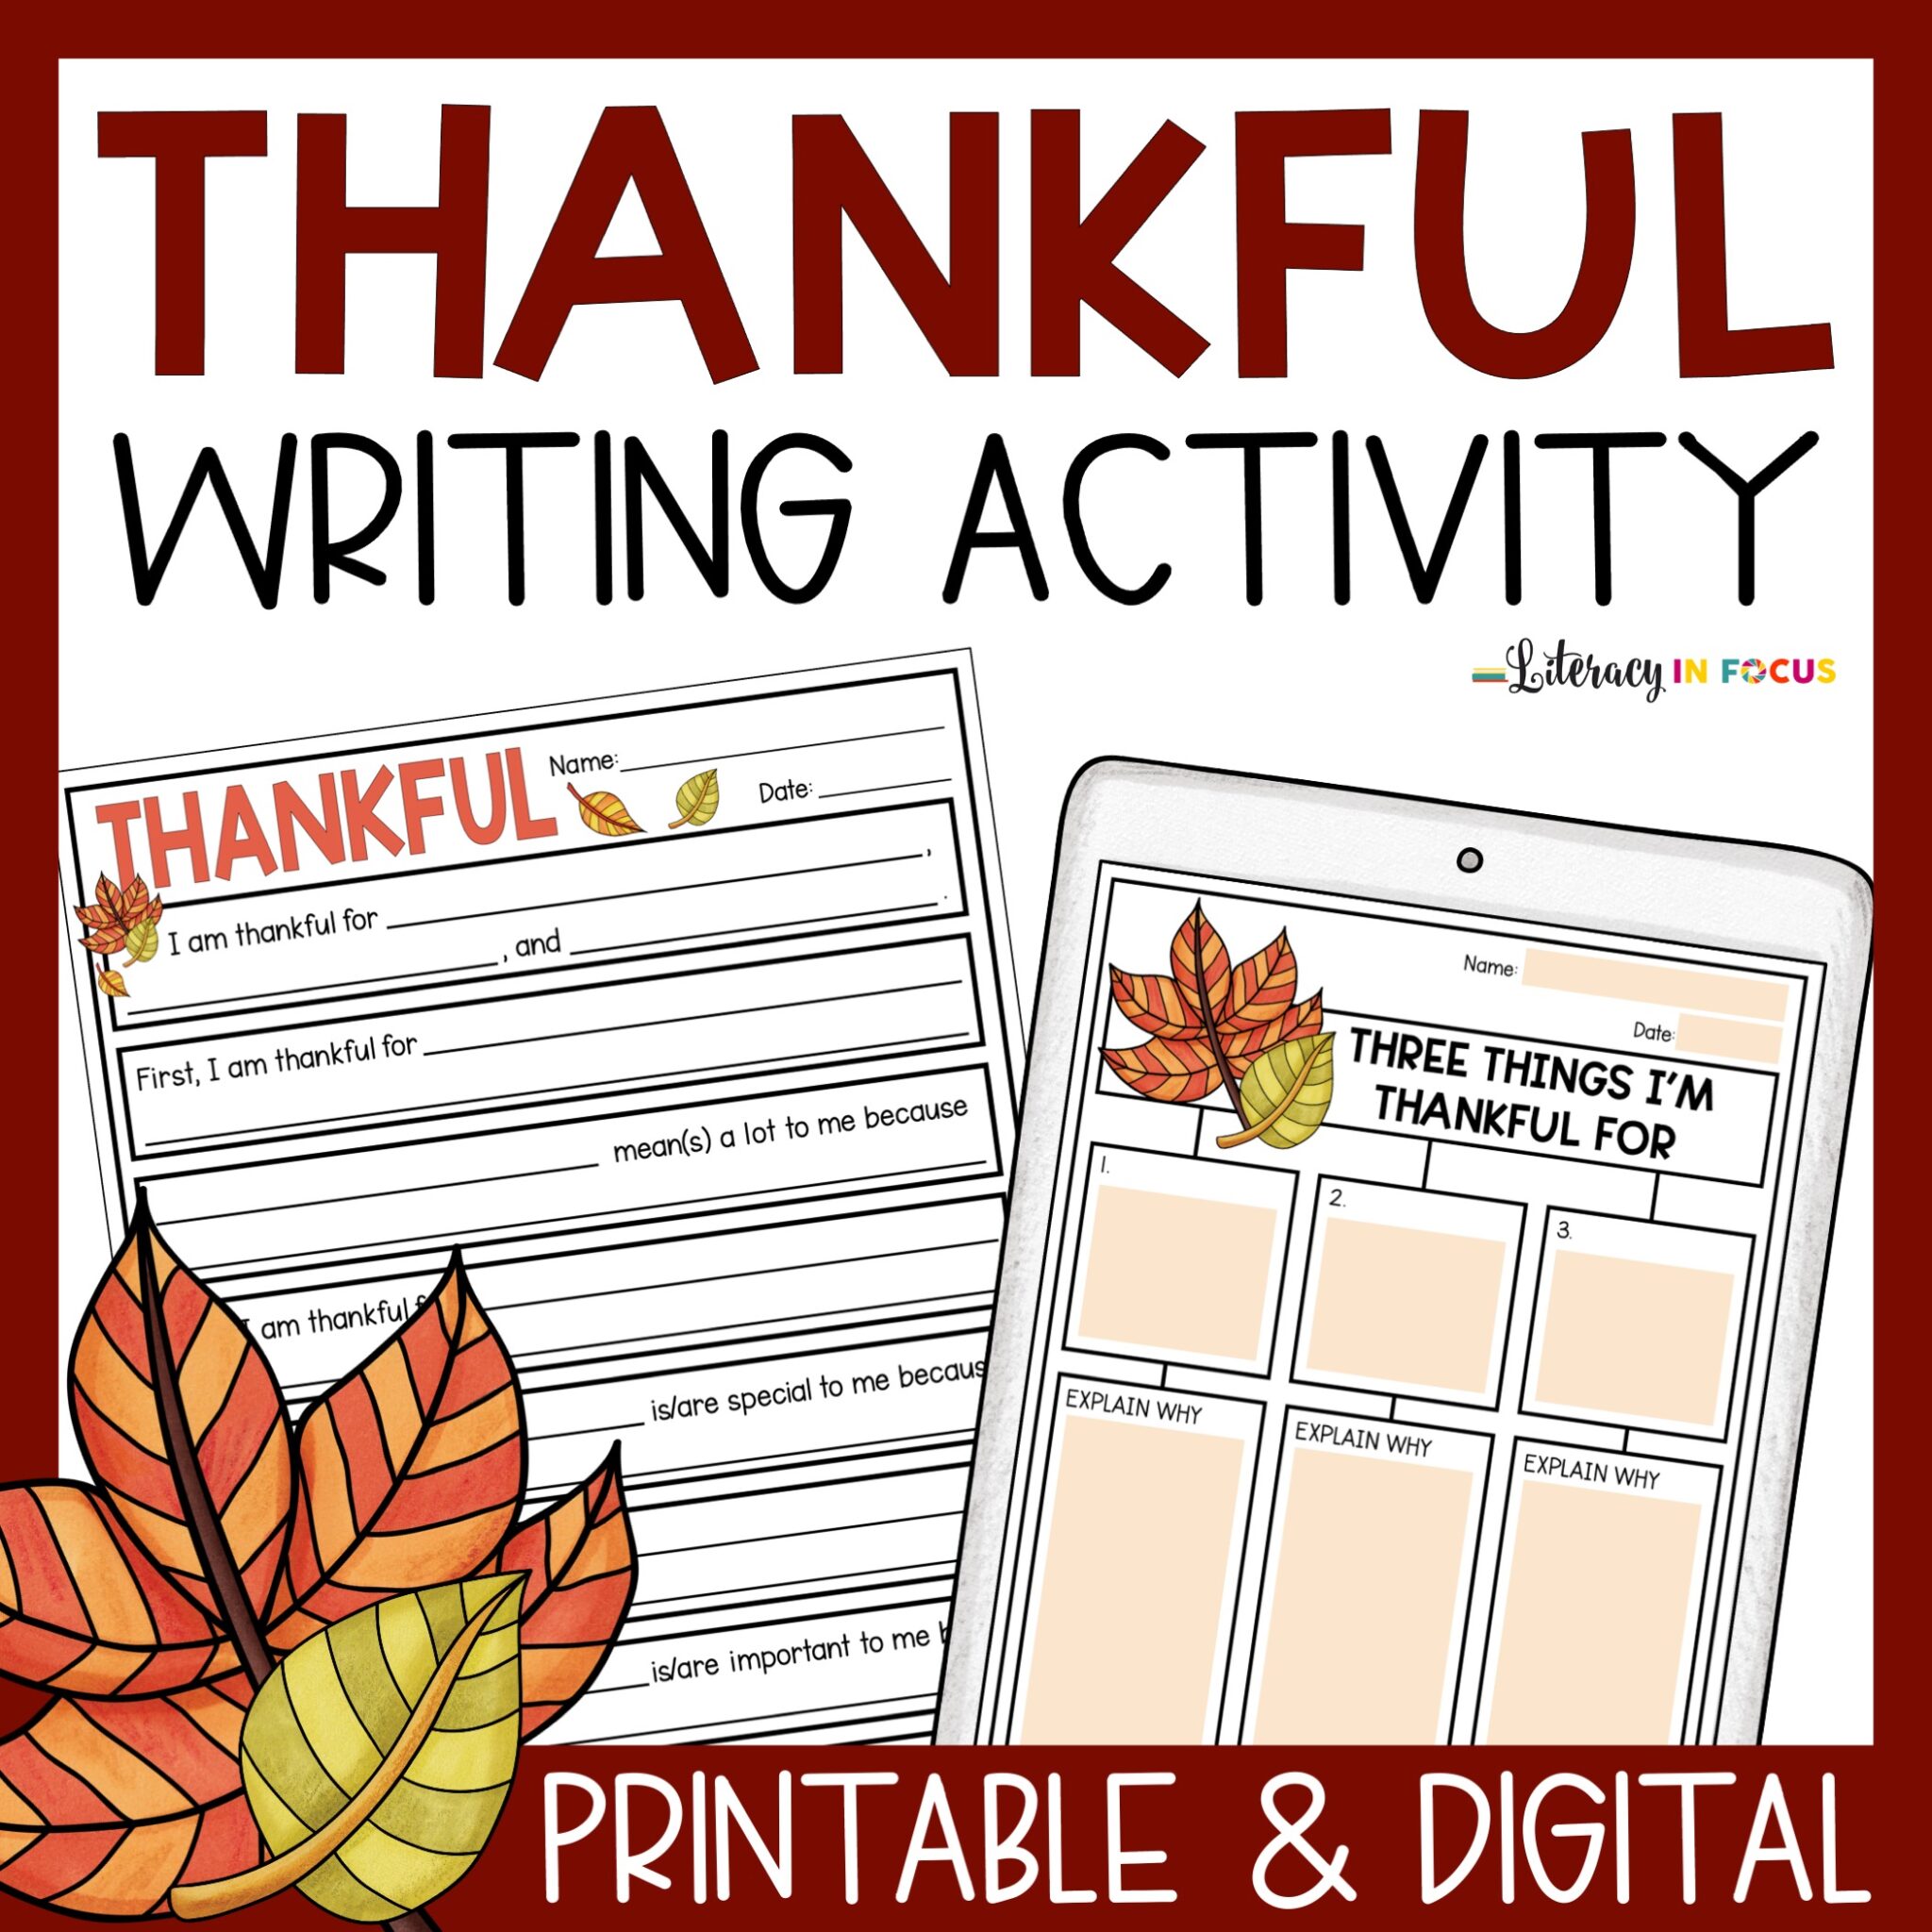 Printable and Digital Thankful Writing Activity